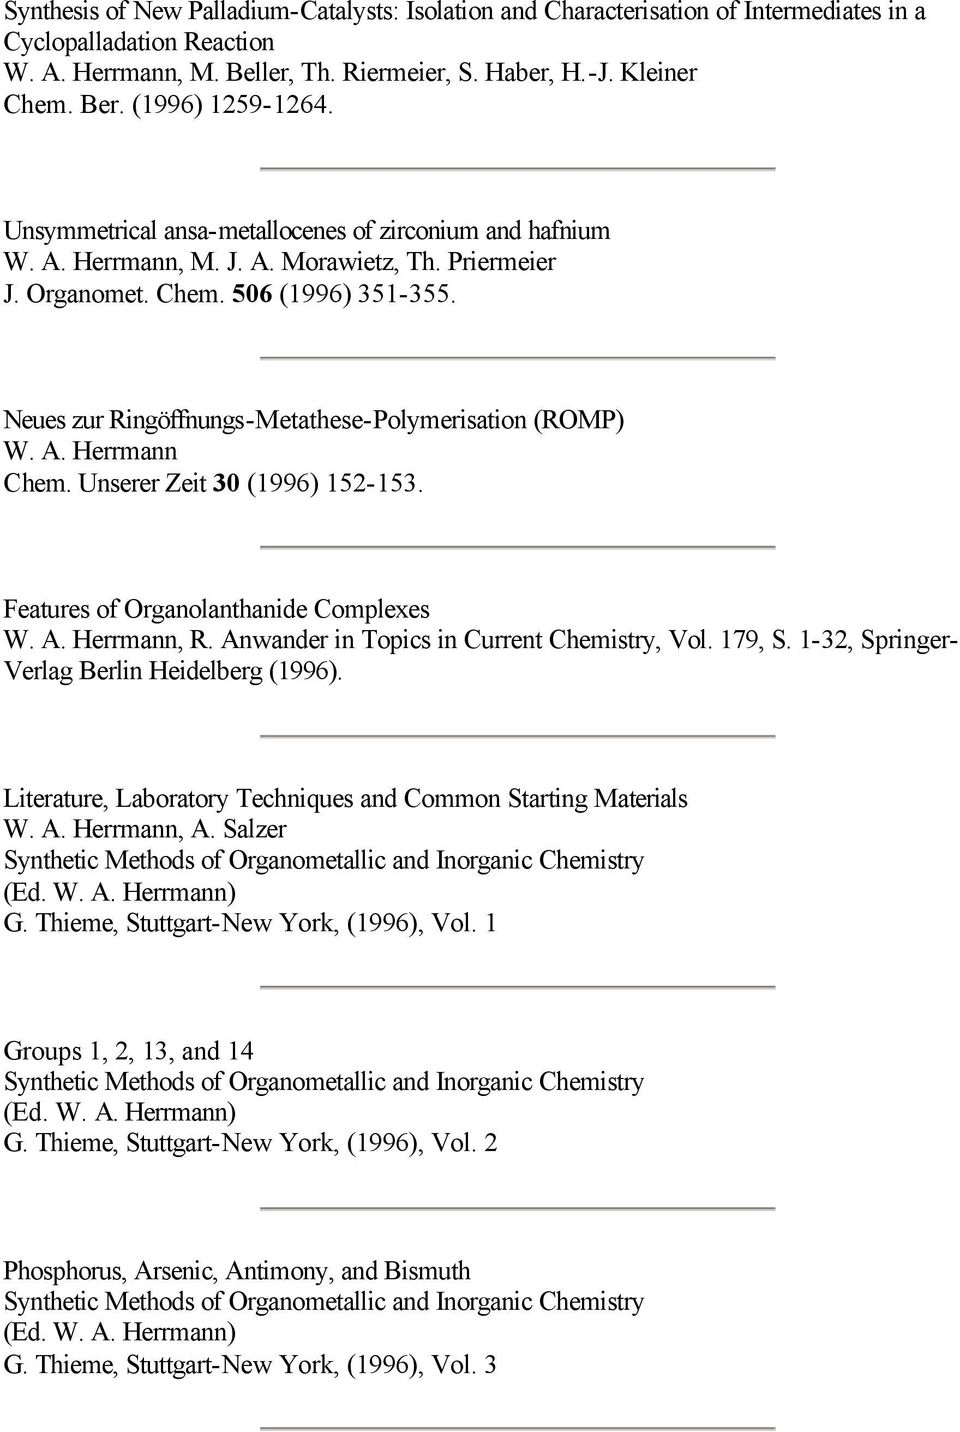 Unserer Zeit 30 (1996) 152-153. Features of Organolanthanide Complexes, R. Anwander in Topics in Current Chemistry, Vol. 179, S. 1-32, Springer- Verlag Berlin Heidelberg (1996).